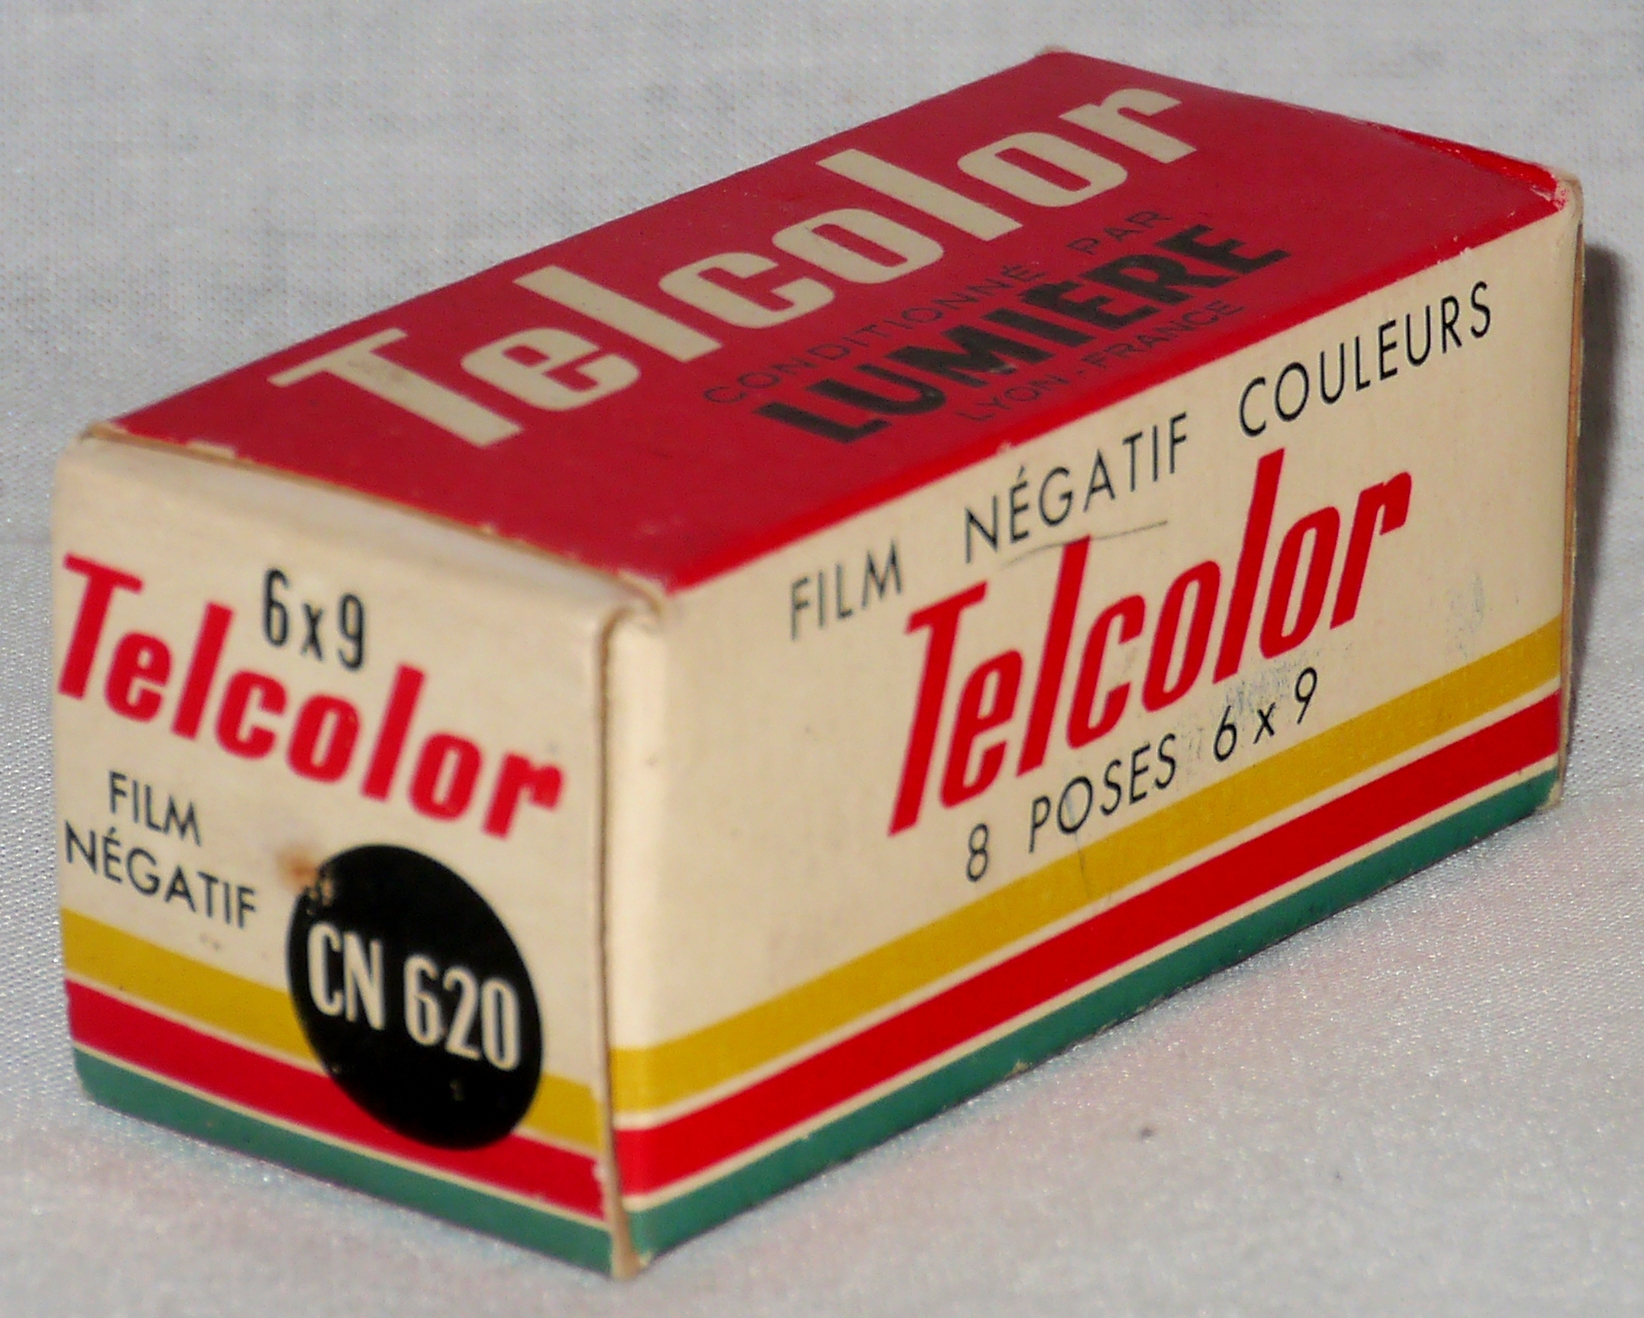 Telcolor CN620 - format 6x9 cm - 8 poses - expire en juillet 1957